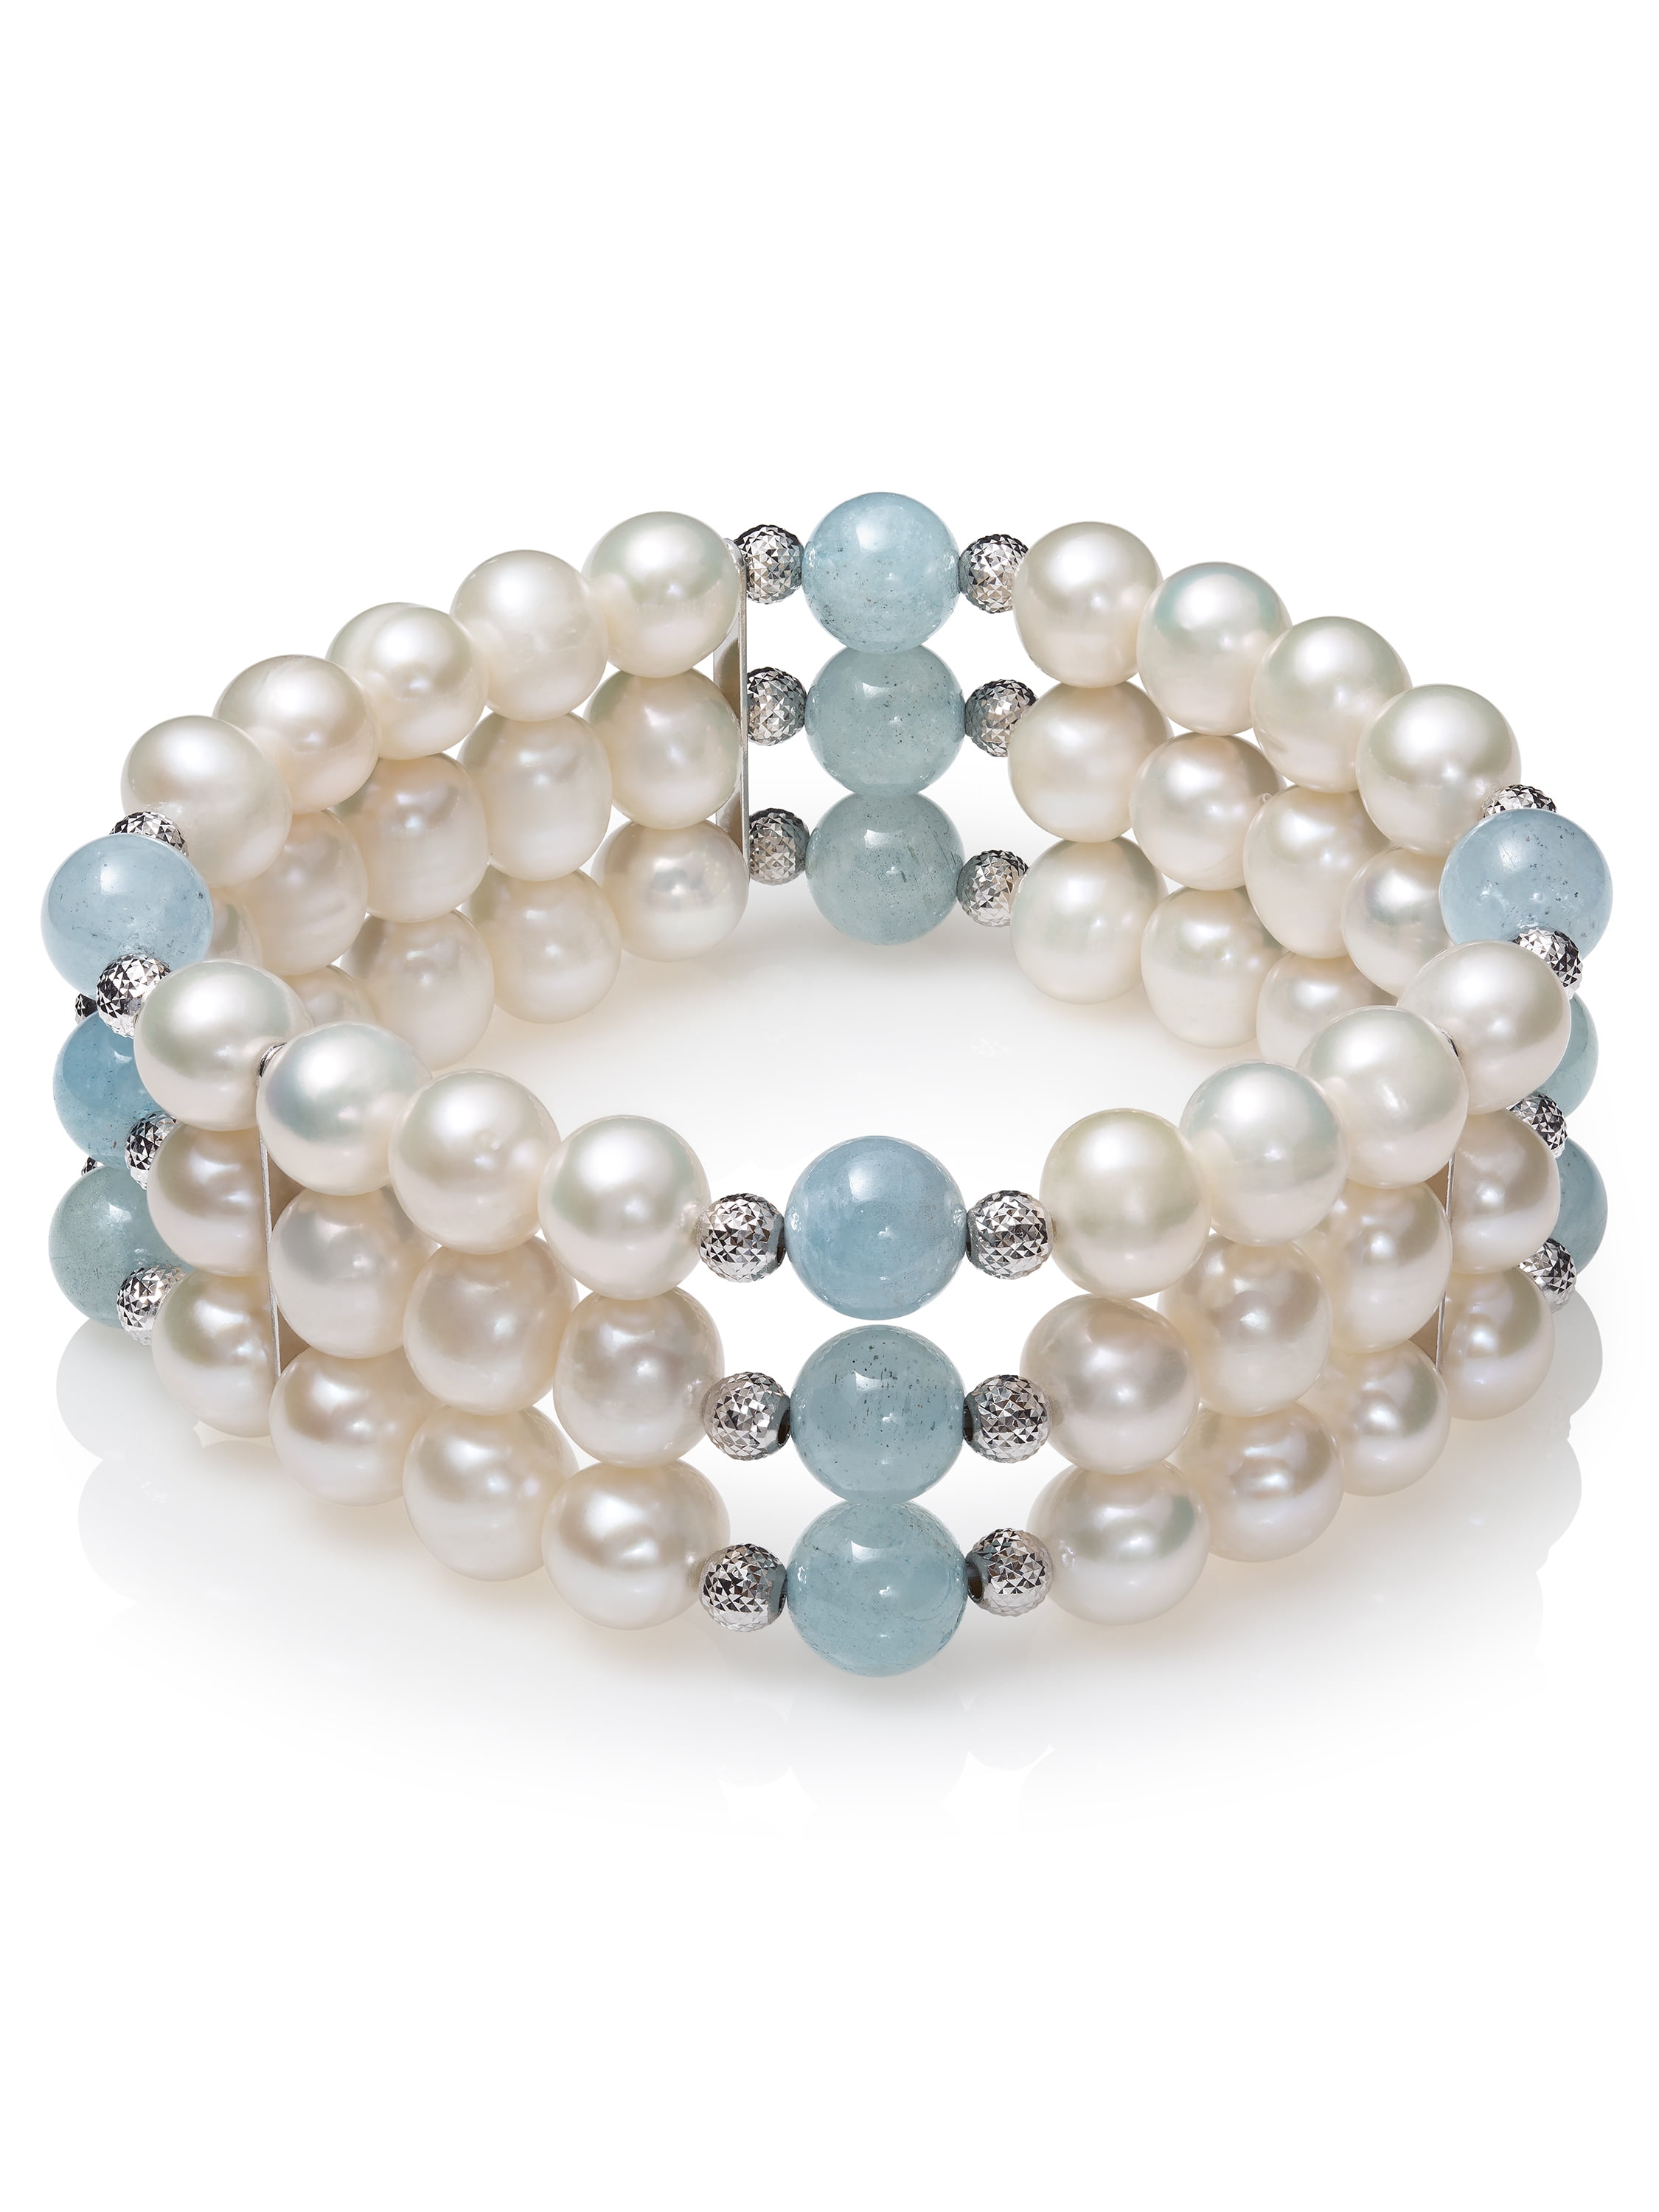 Genuine White Pearl 6-7MM Beautiful 3 Rows White Pearl Bracelet 7.5"